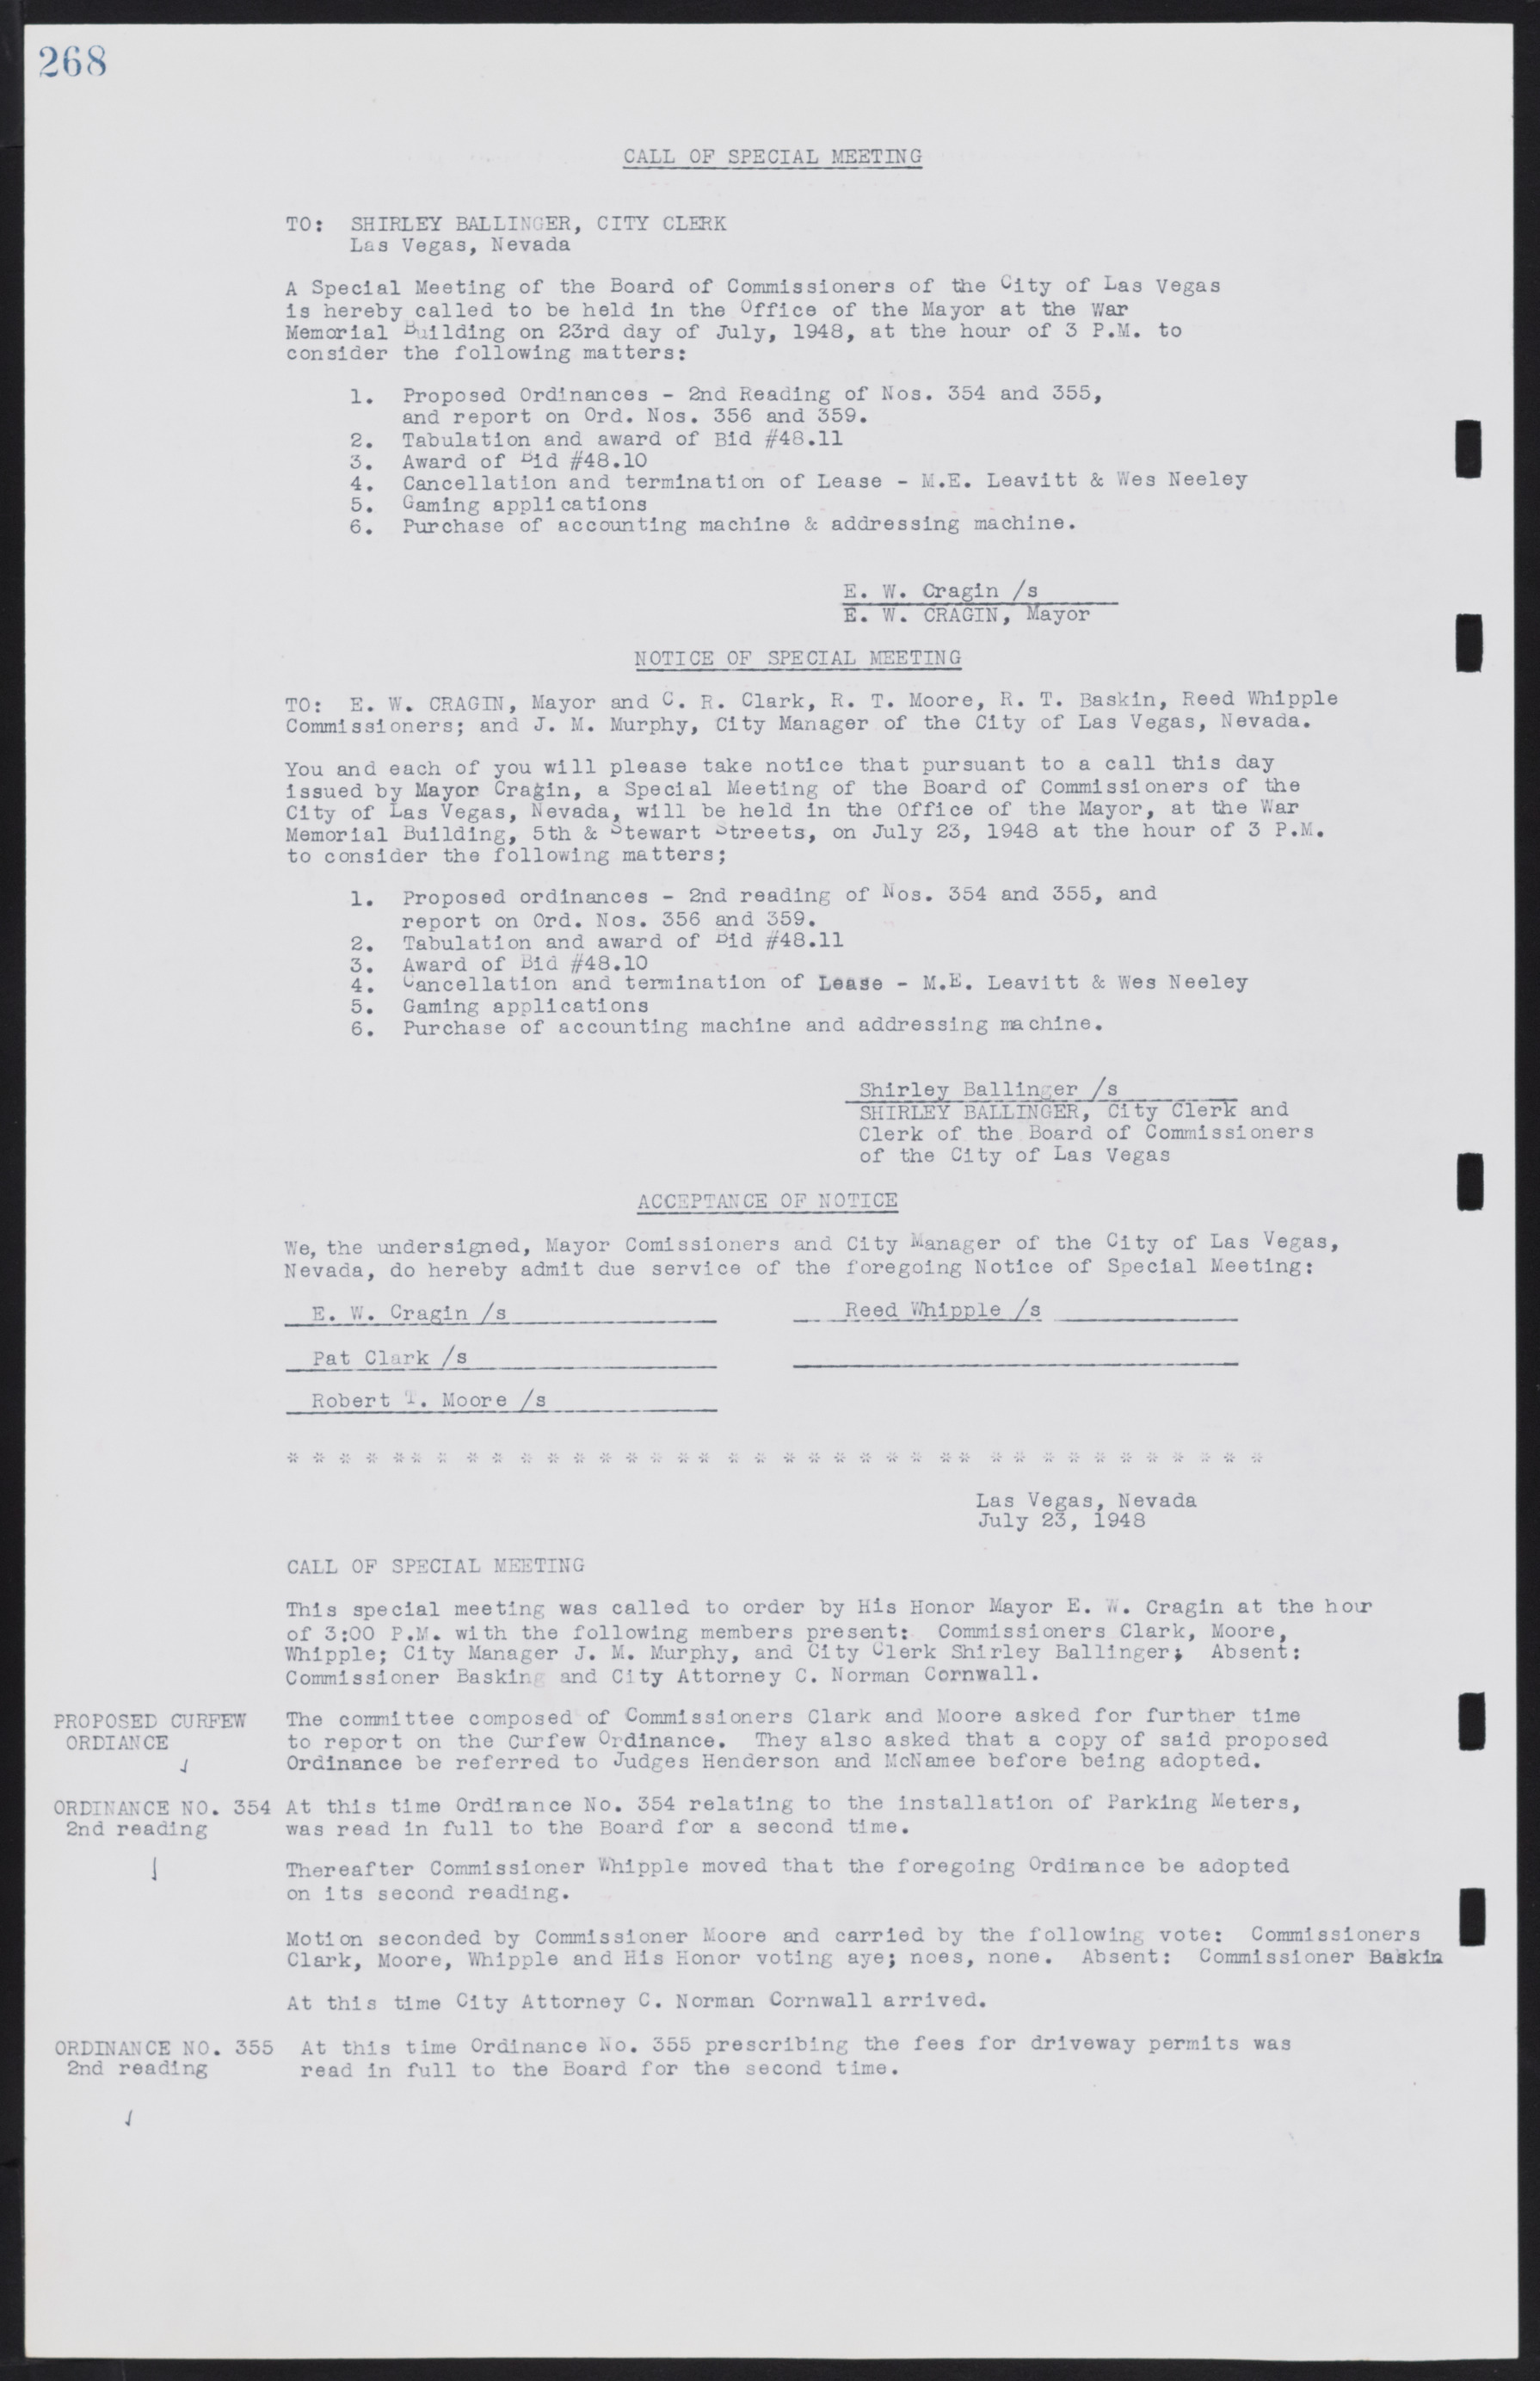 Las Vegas City Commission Minutes, January 7, 1947 to October 26, 1949, lvc000006-292